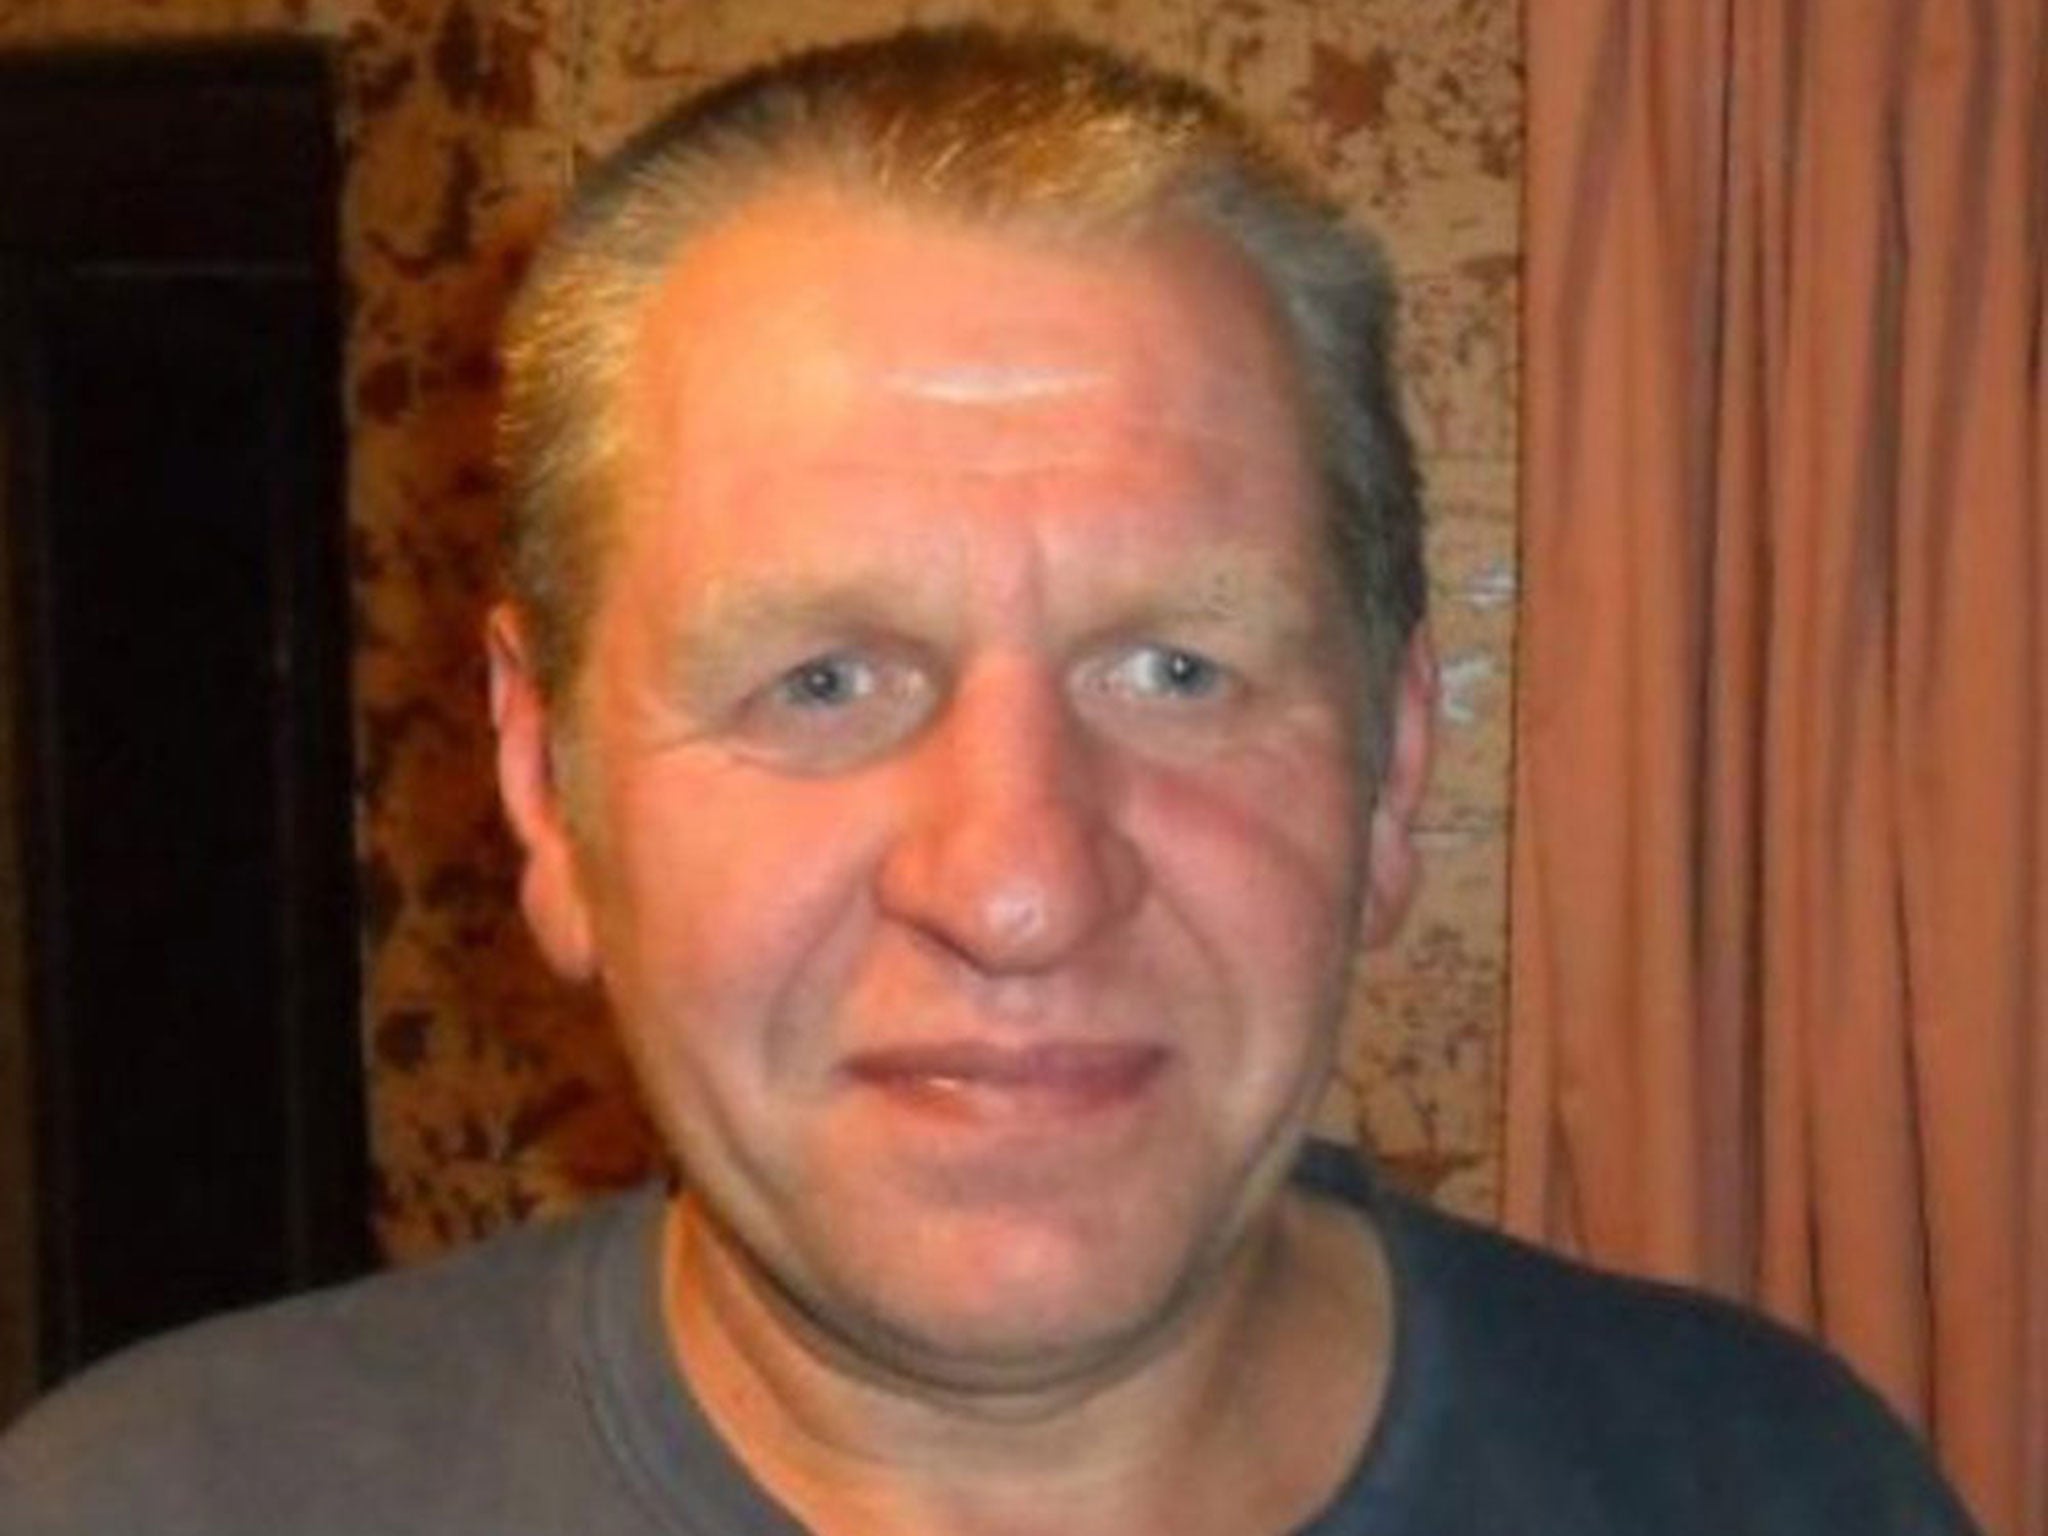 57-year-old Vitautas Jokubauskas is understood to be the arrested man